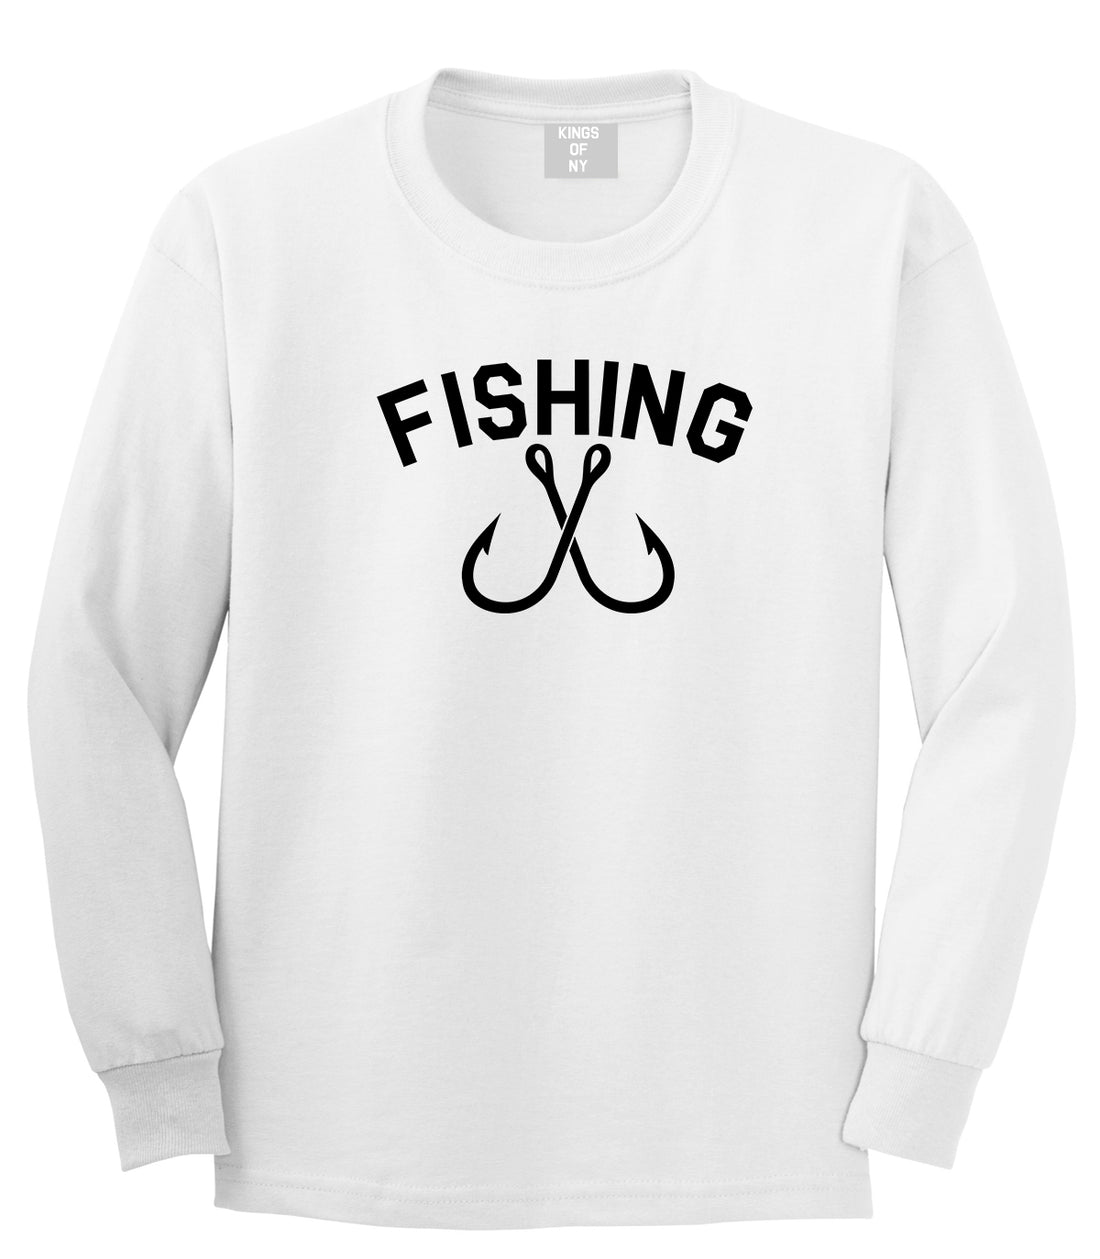 Fishing Hook Logo Mens Long Sleeve T-Shirt by Kings of Ny. White / XXX-Large